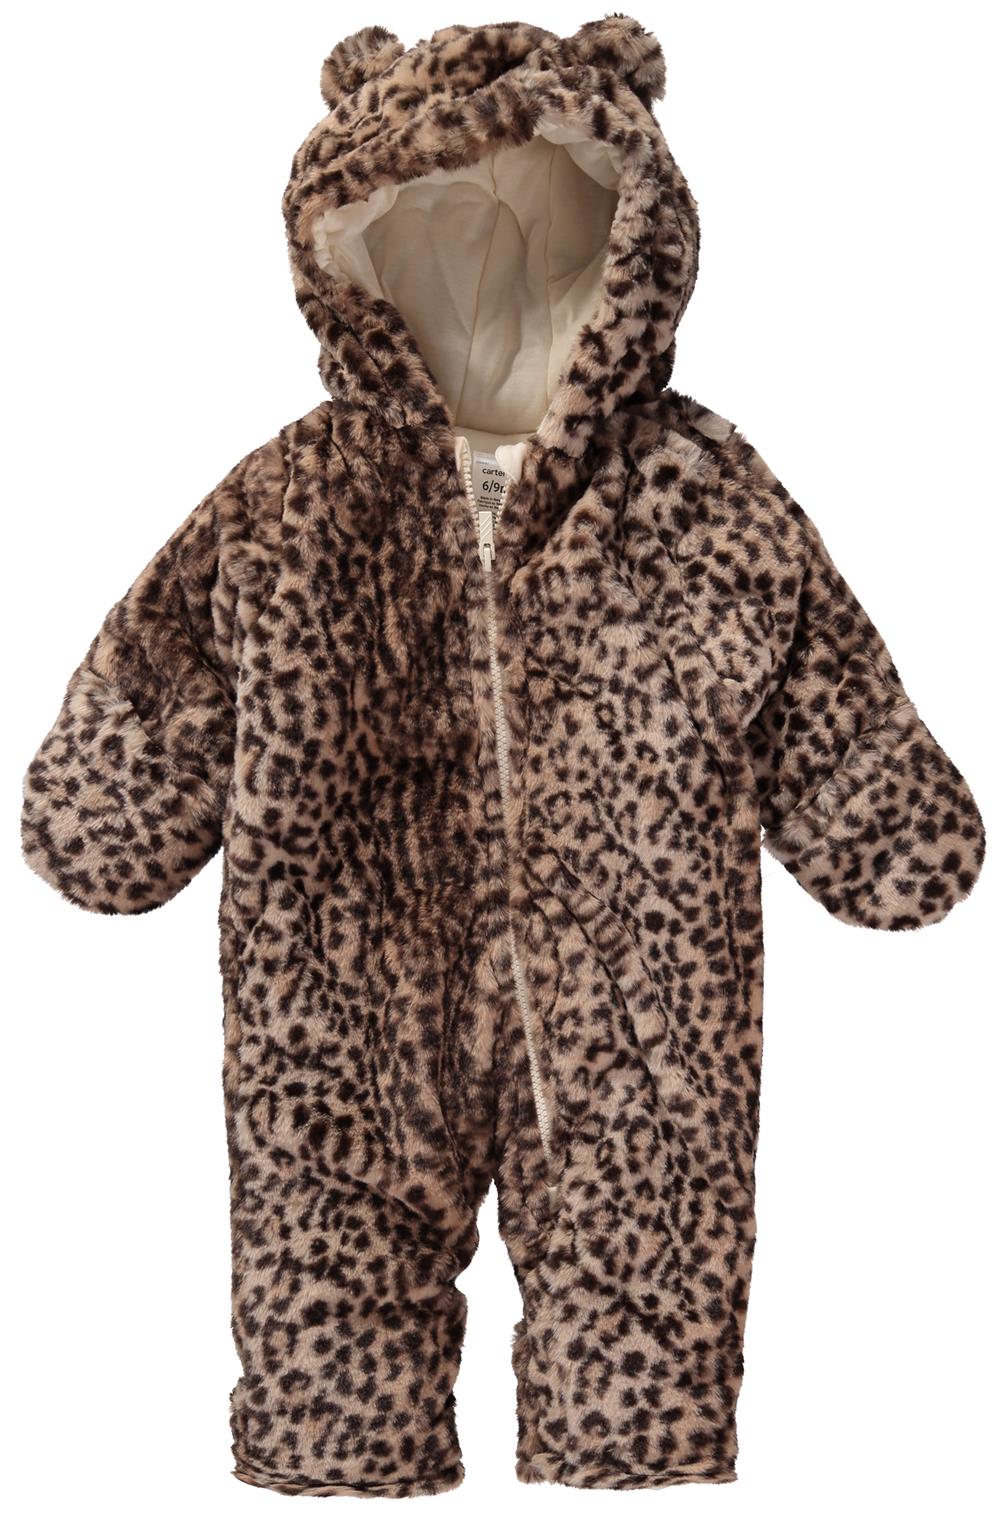 Carters Girls 0-9 Months Cheetah Pram Suit